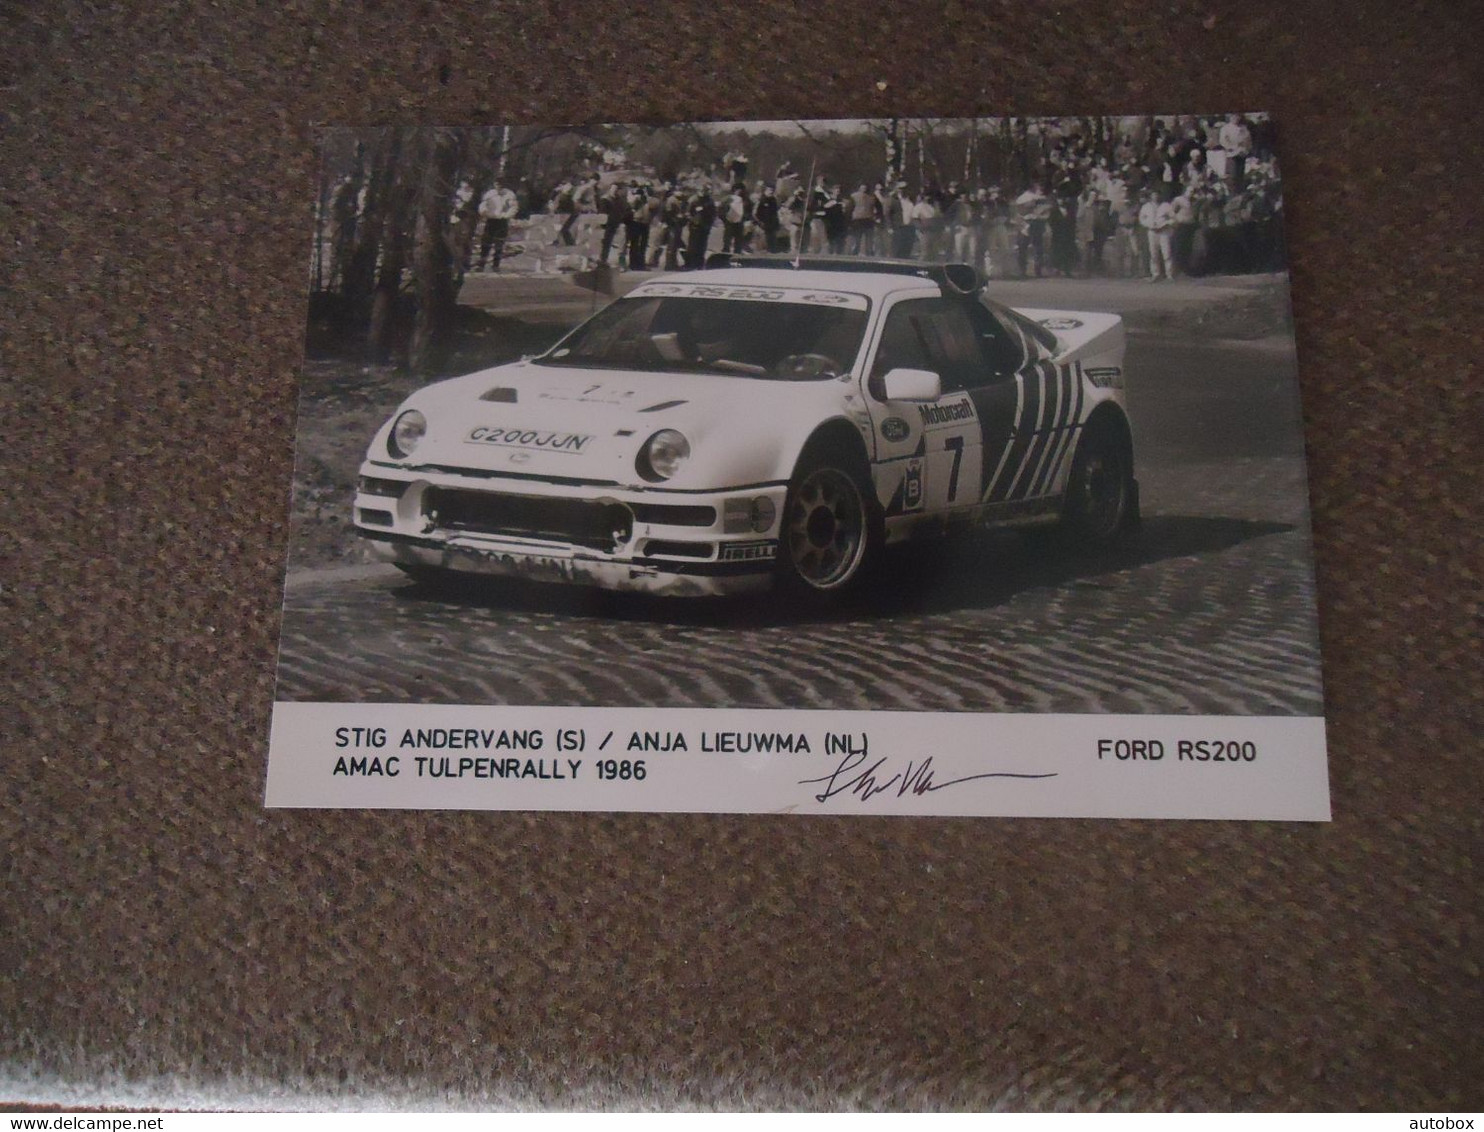 Photo De Presse Signée Stig ANDERVANG / FORD RS 200 Groupe B RALLYE 1986 ( Autographe ) - Automobile